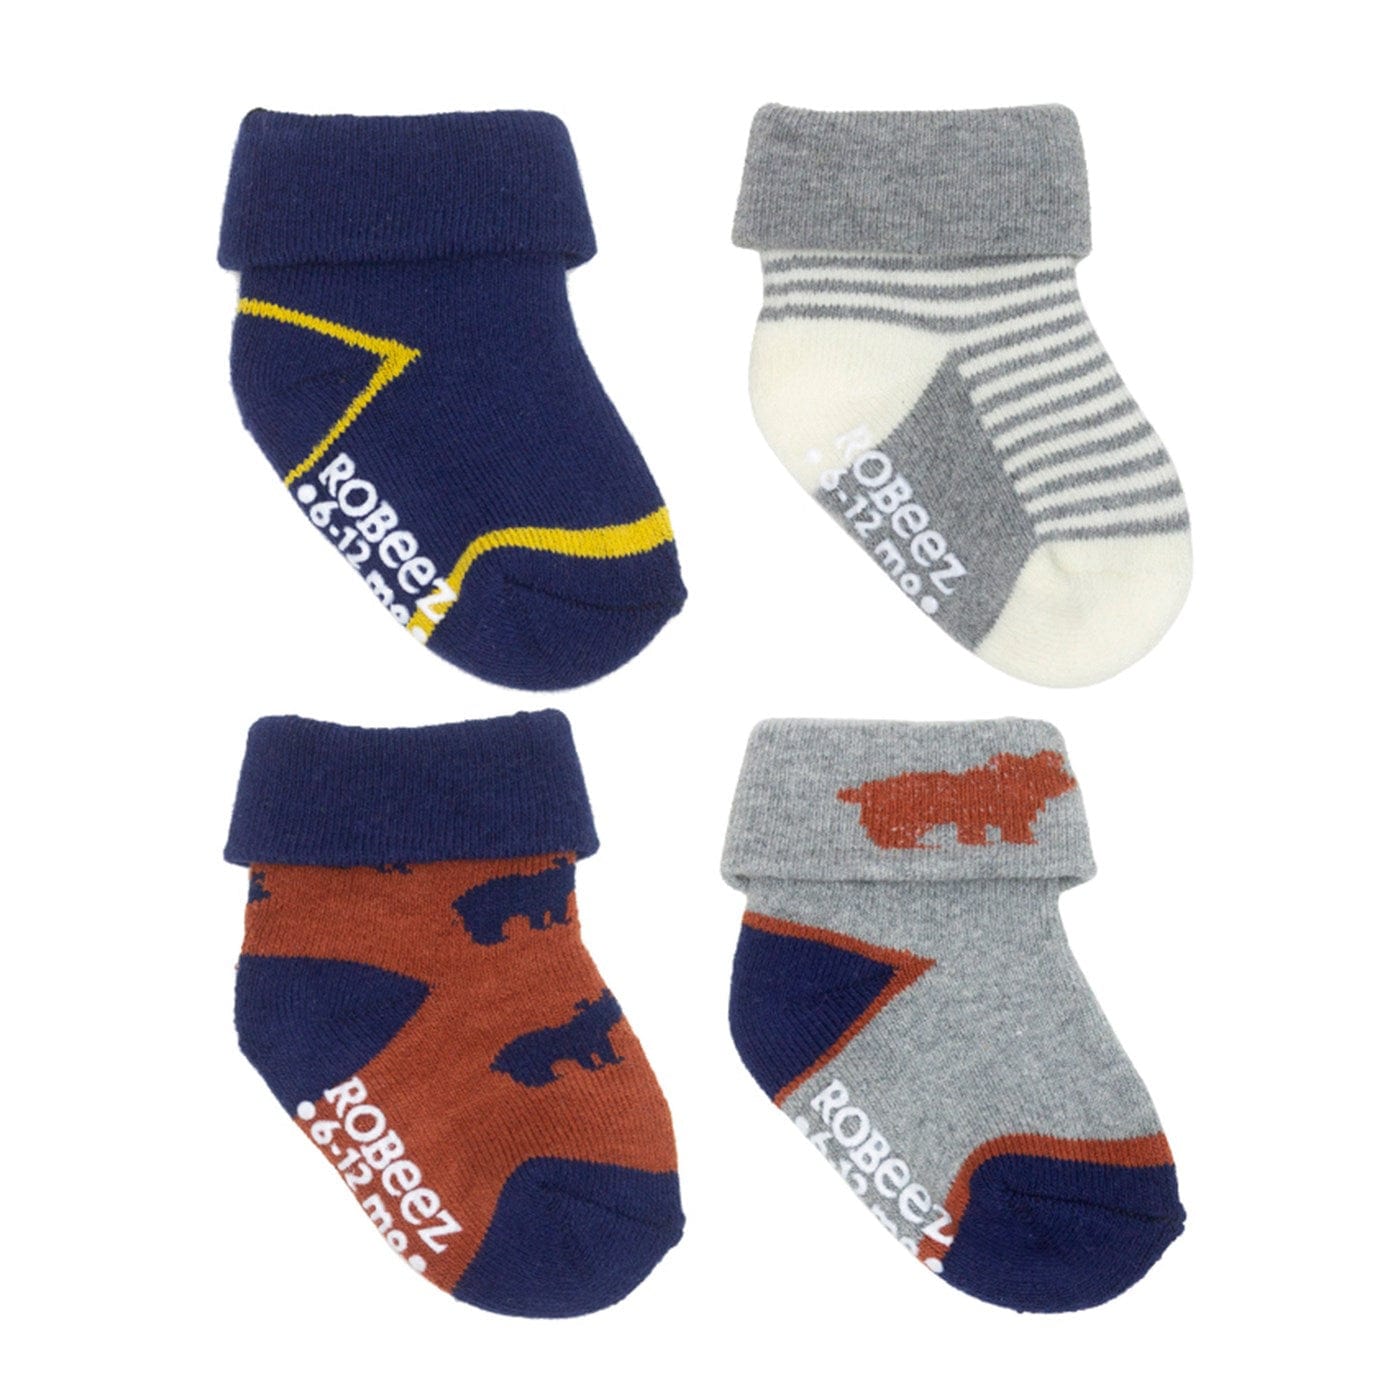 Robeez socks Robeez Non-Skid Socks 8 PK - Beary Cute